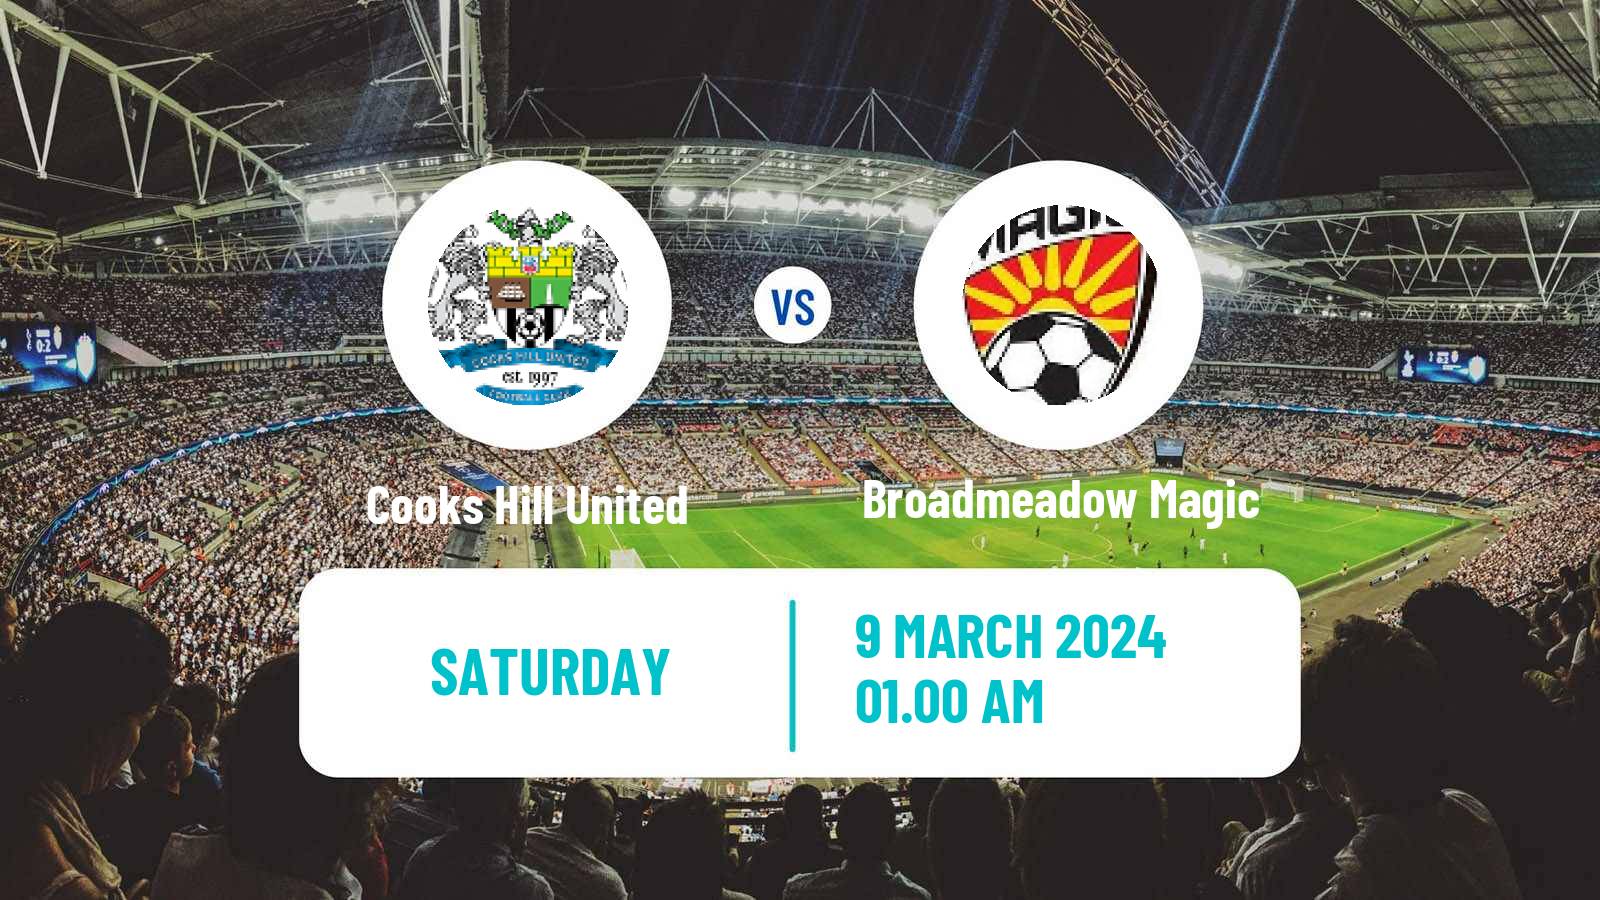 Soccer Australian NPL Northern NSW Cooks Hill United - Broadmeadow Magic